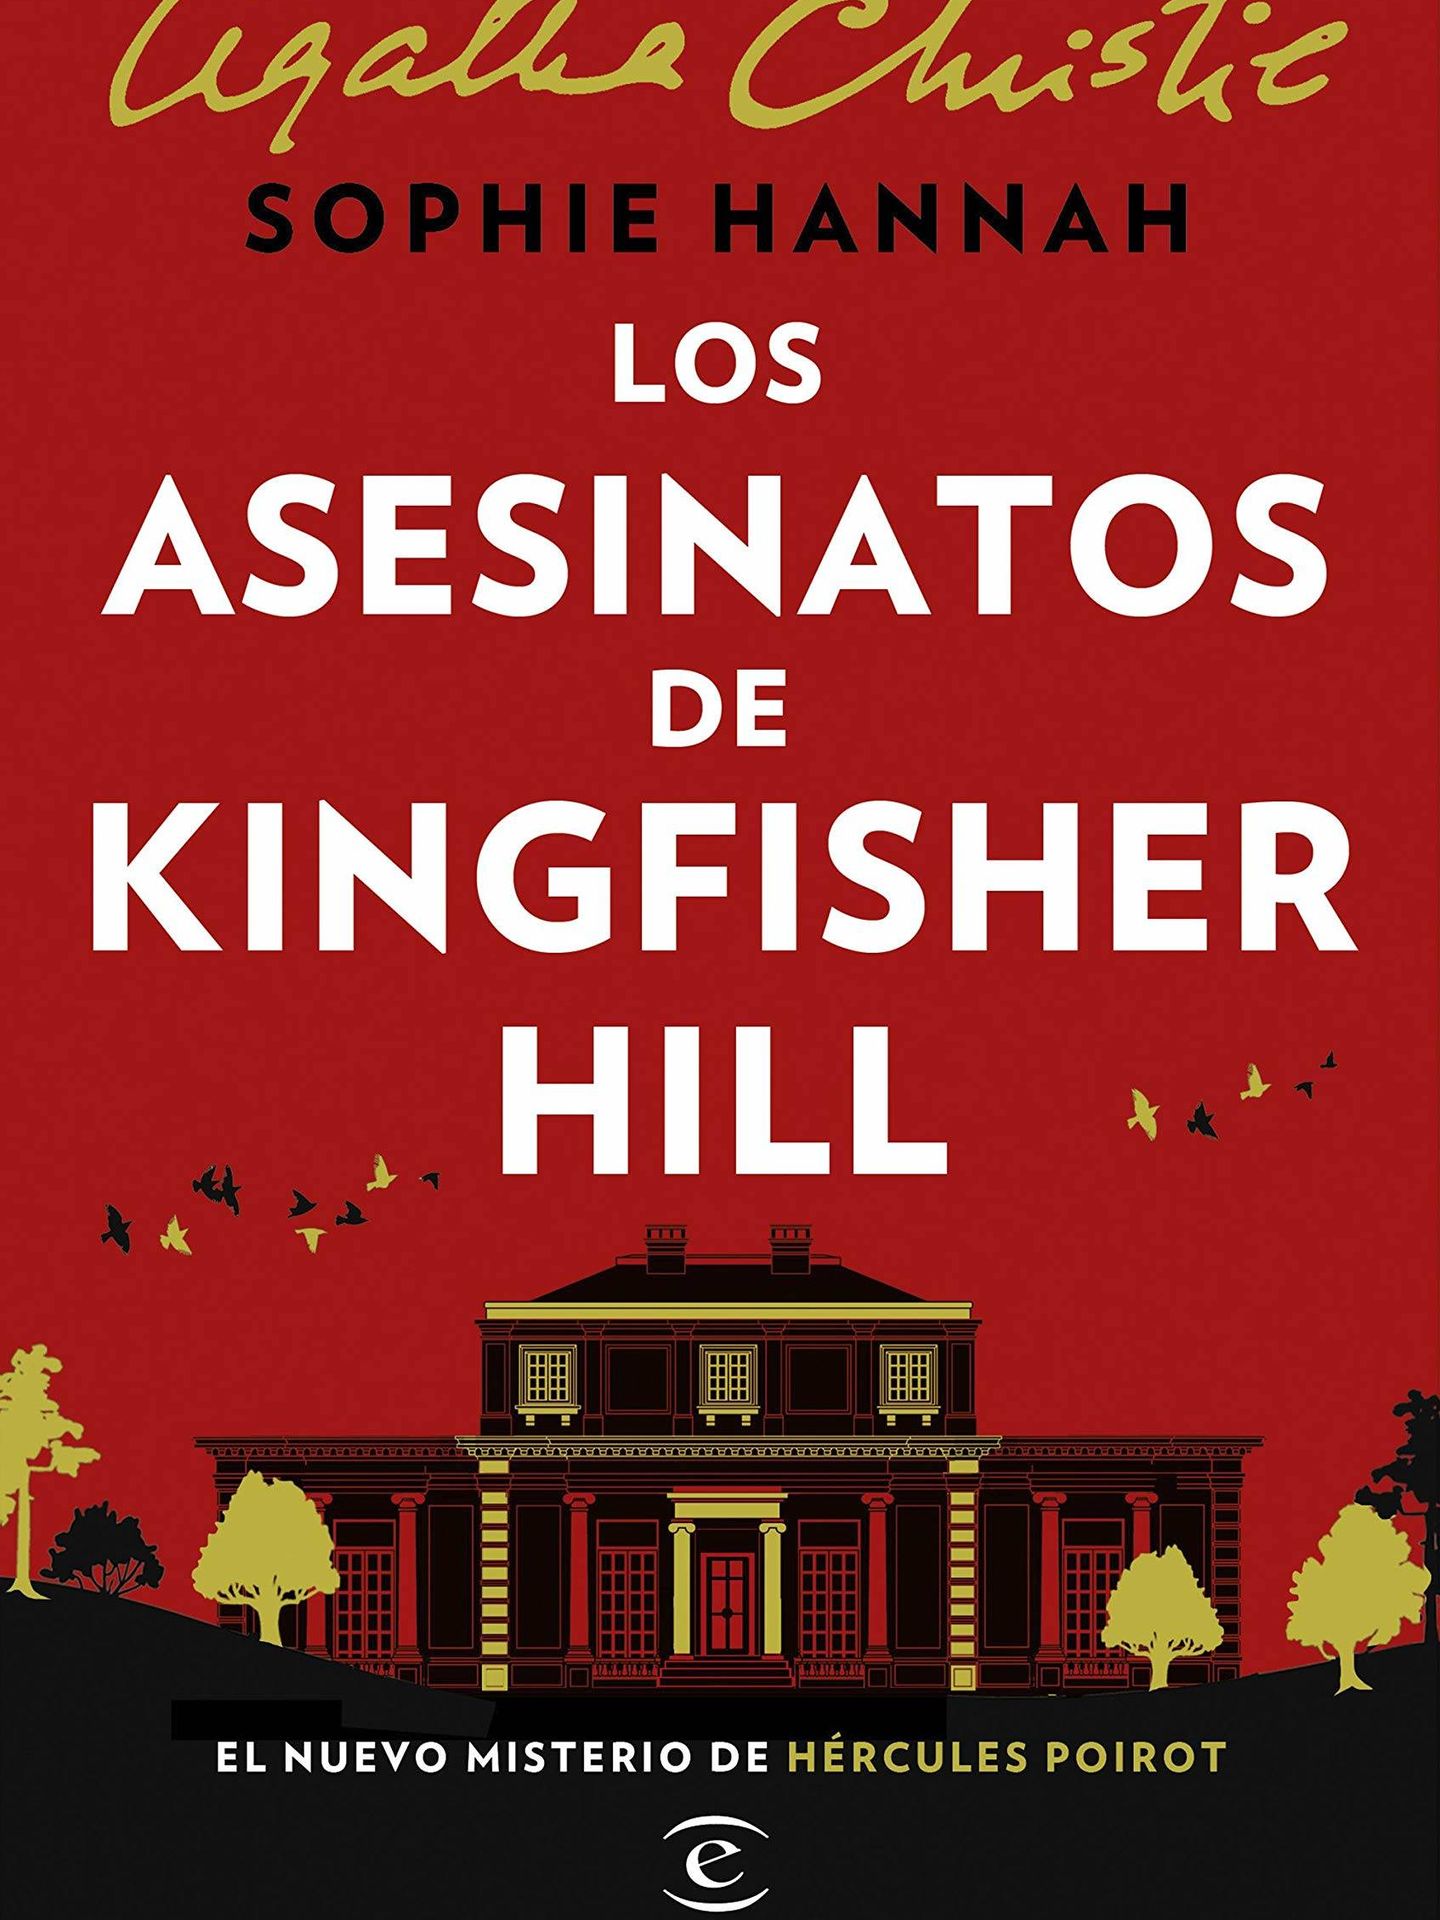 'Los asesinatos de Kingfisher Hill' 